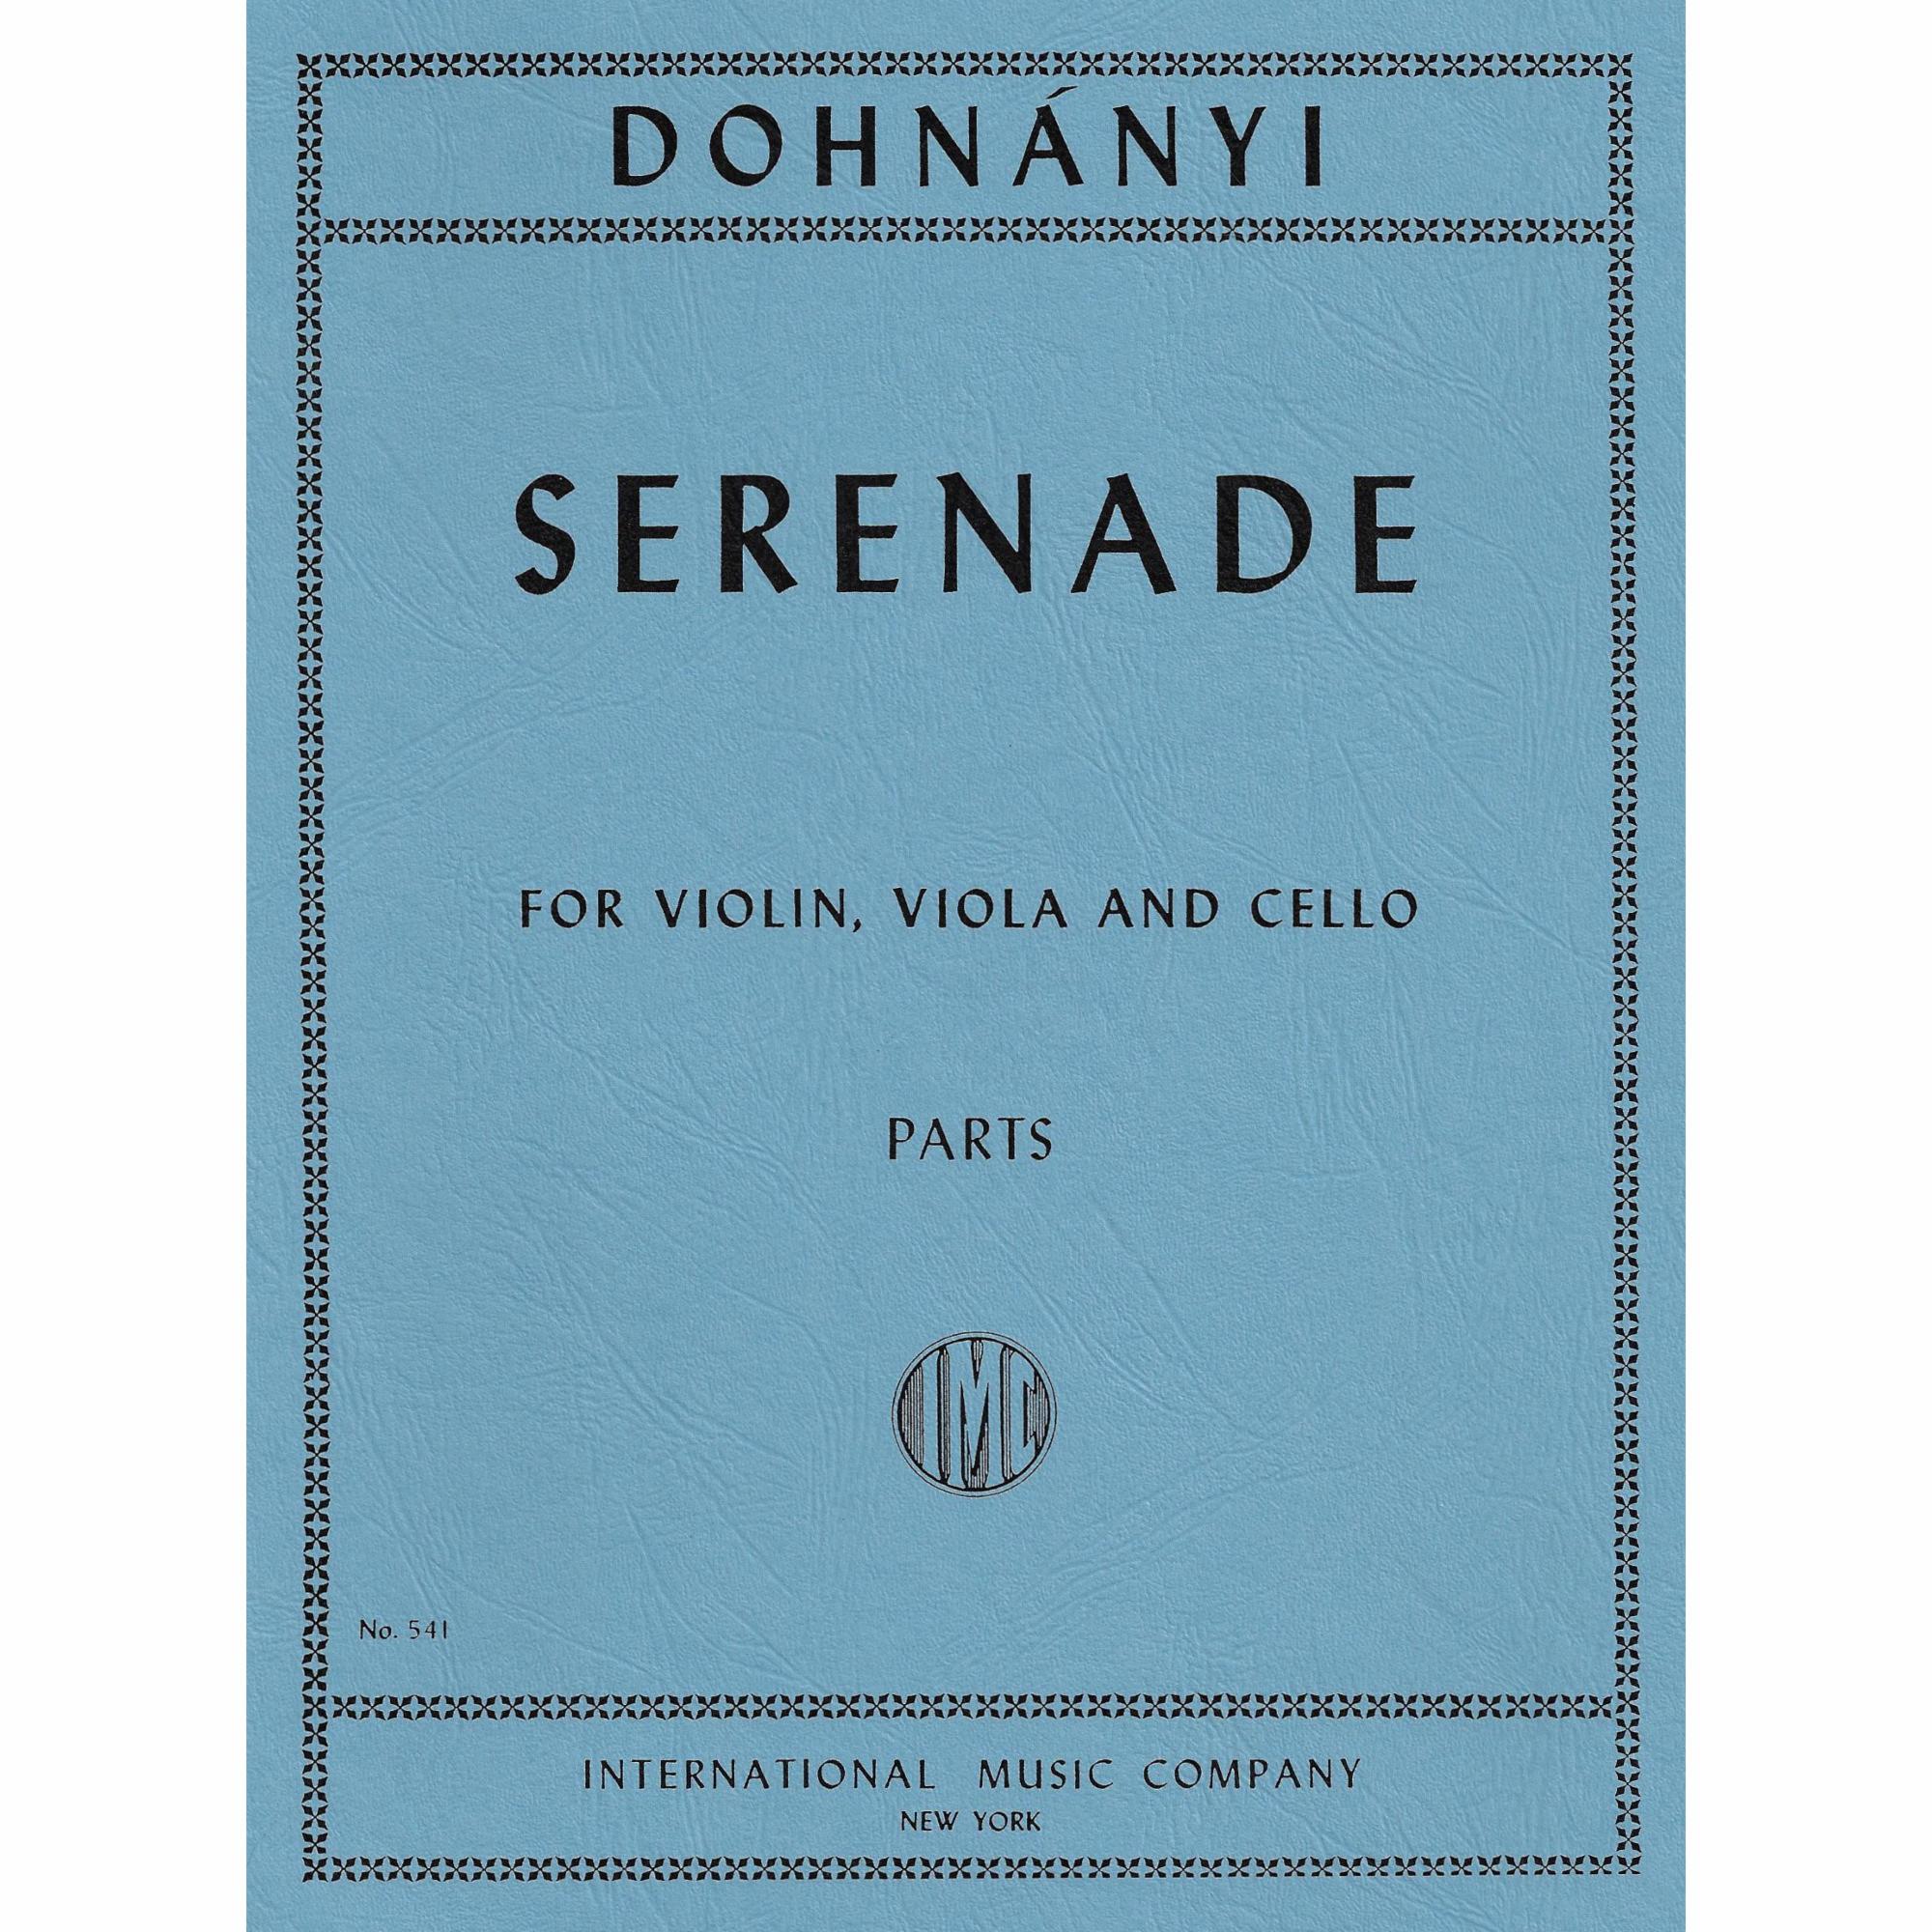 Dohnanyi -- Serenade in C Major, Op. 10 for Violin, Viola, and Cello